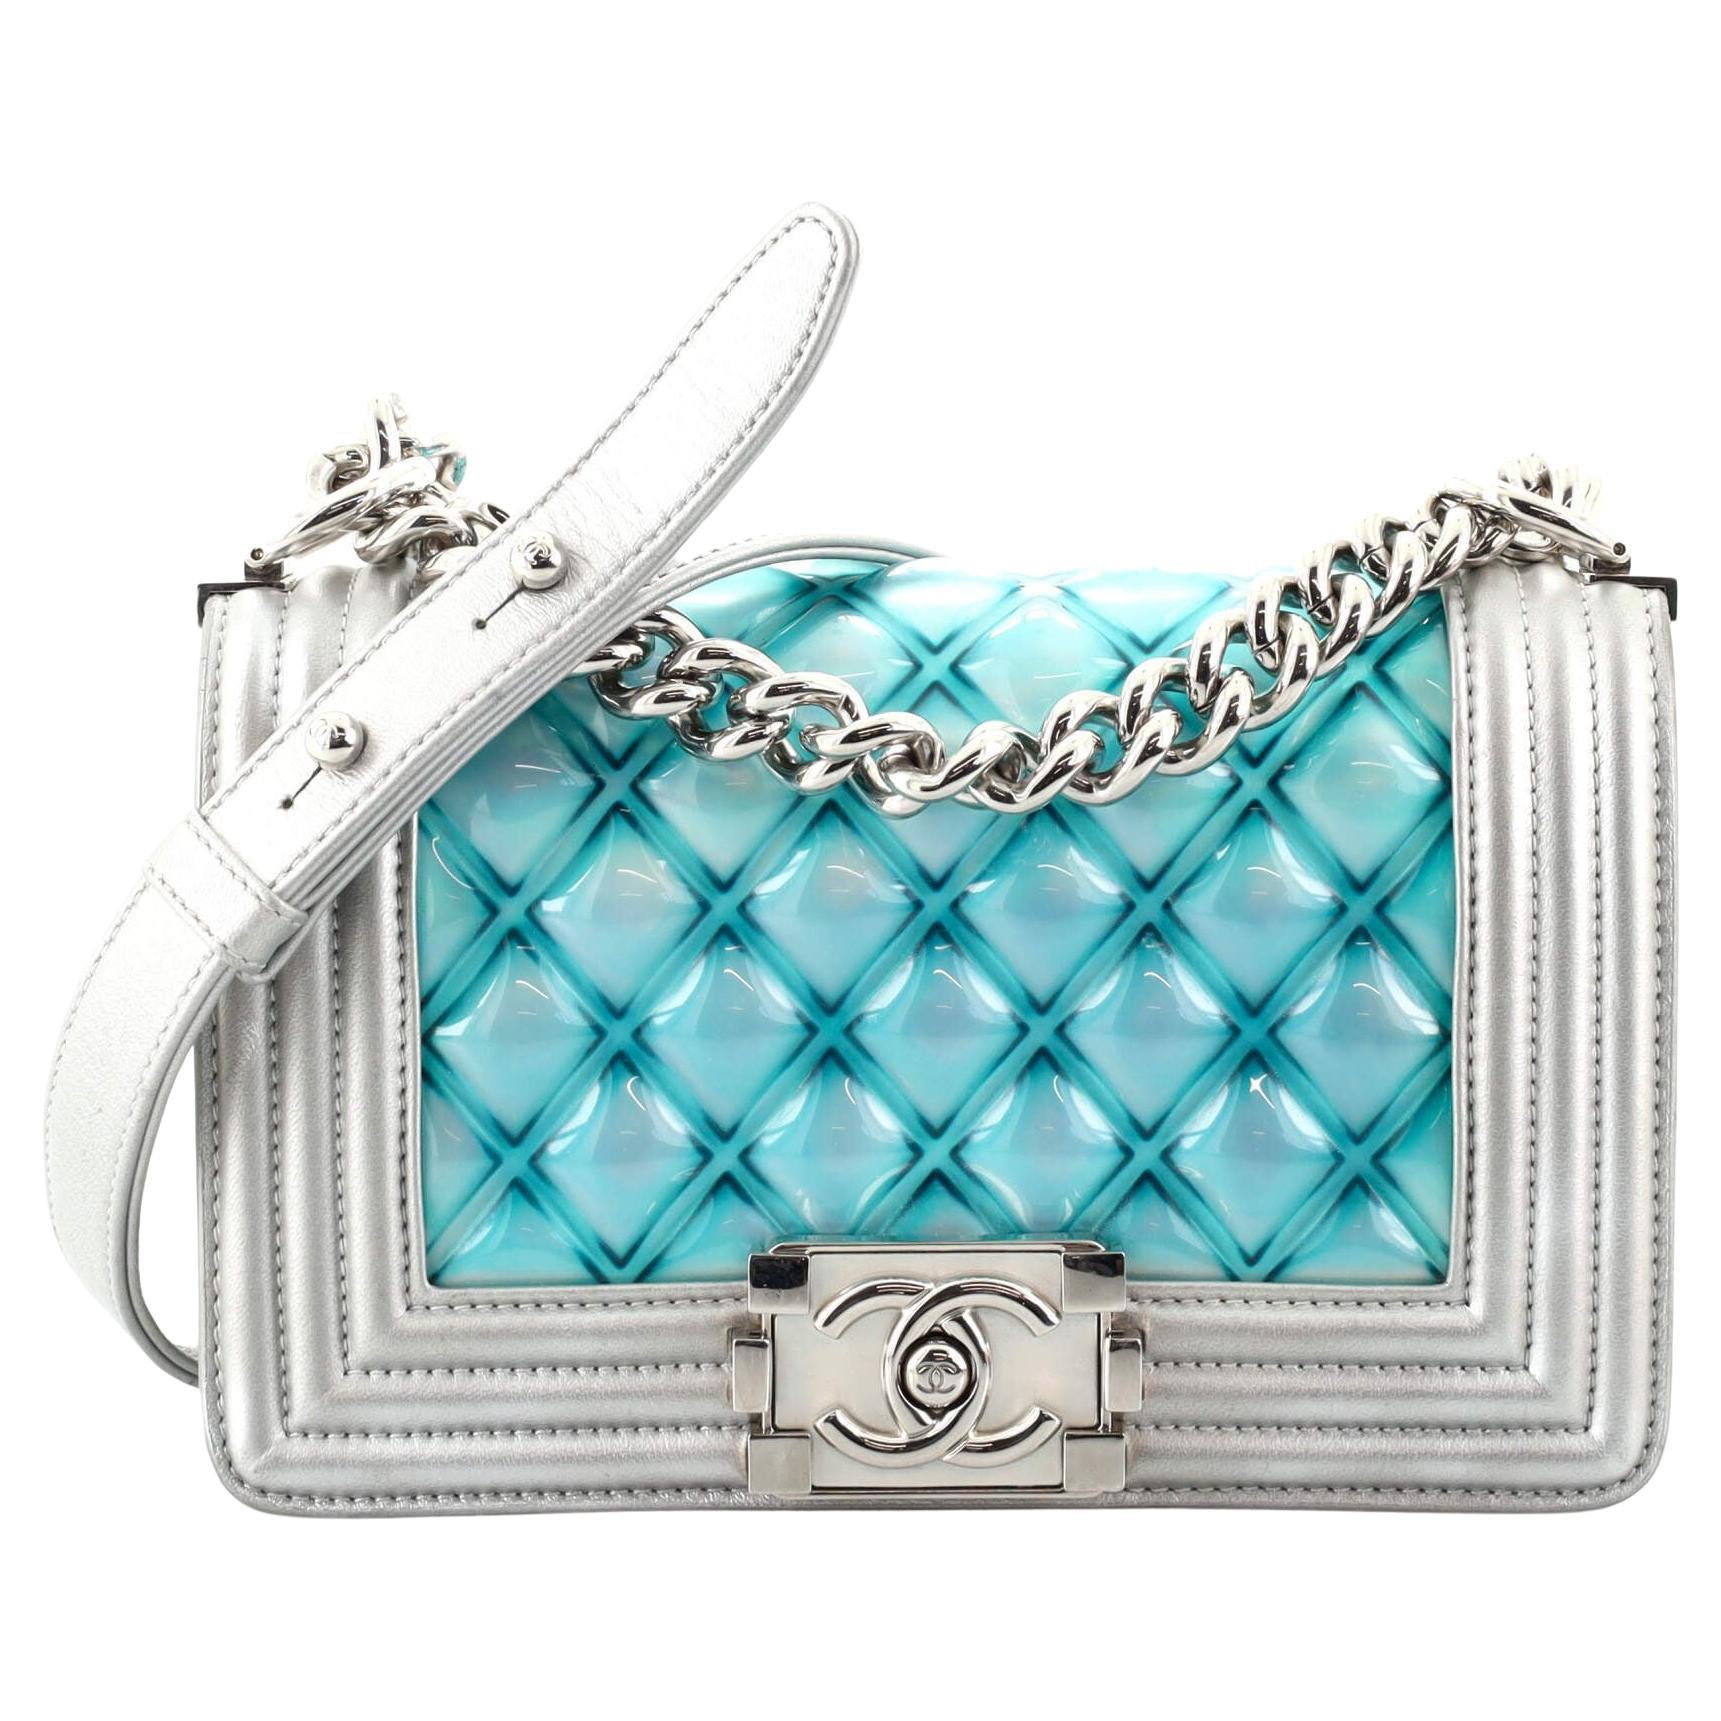 Holographic Chanel Bag - 4 For Sale on 1stDibs